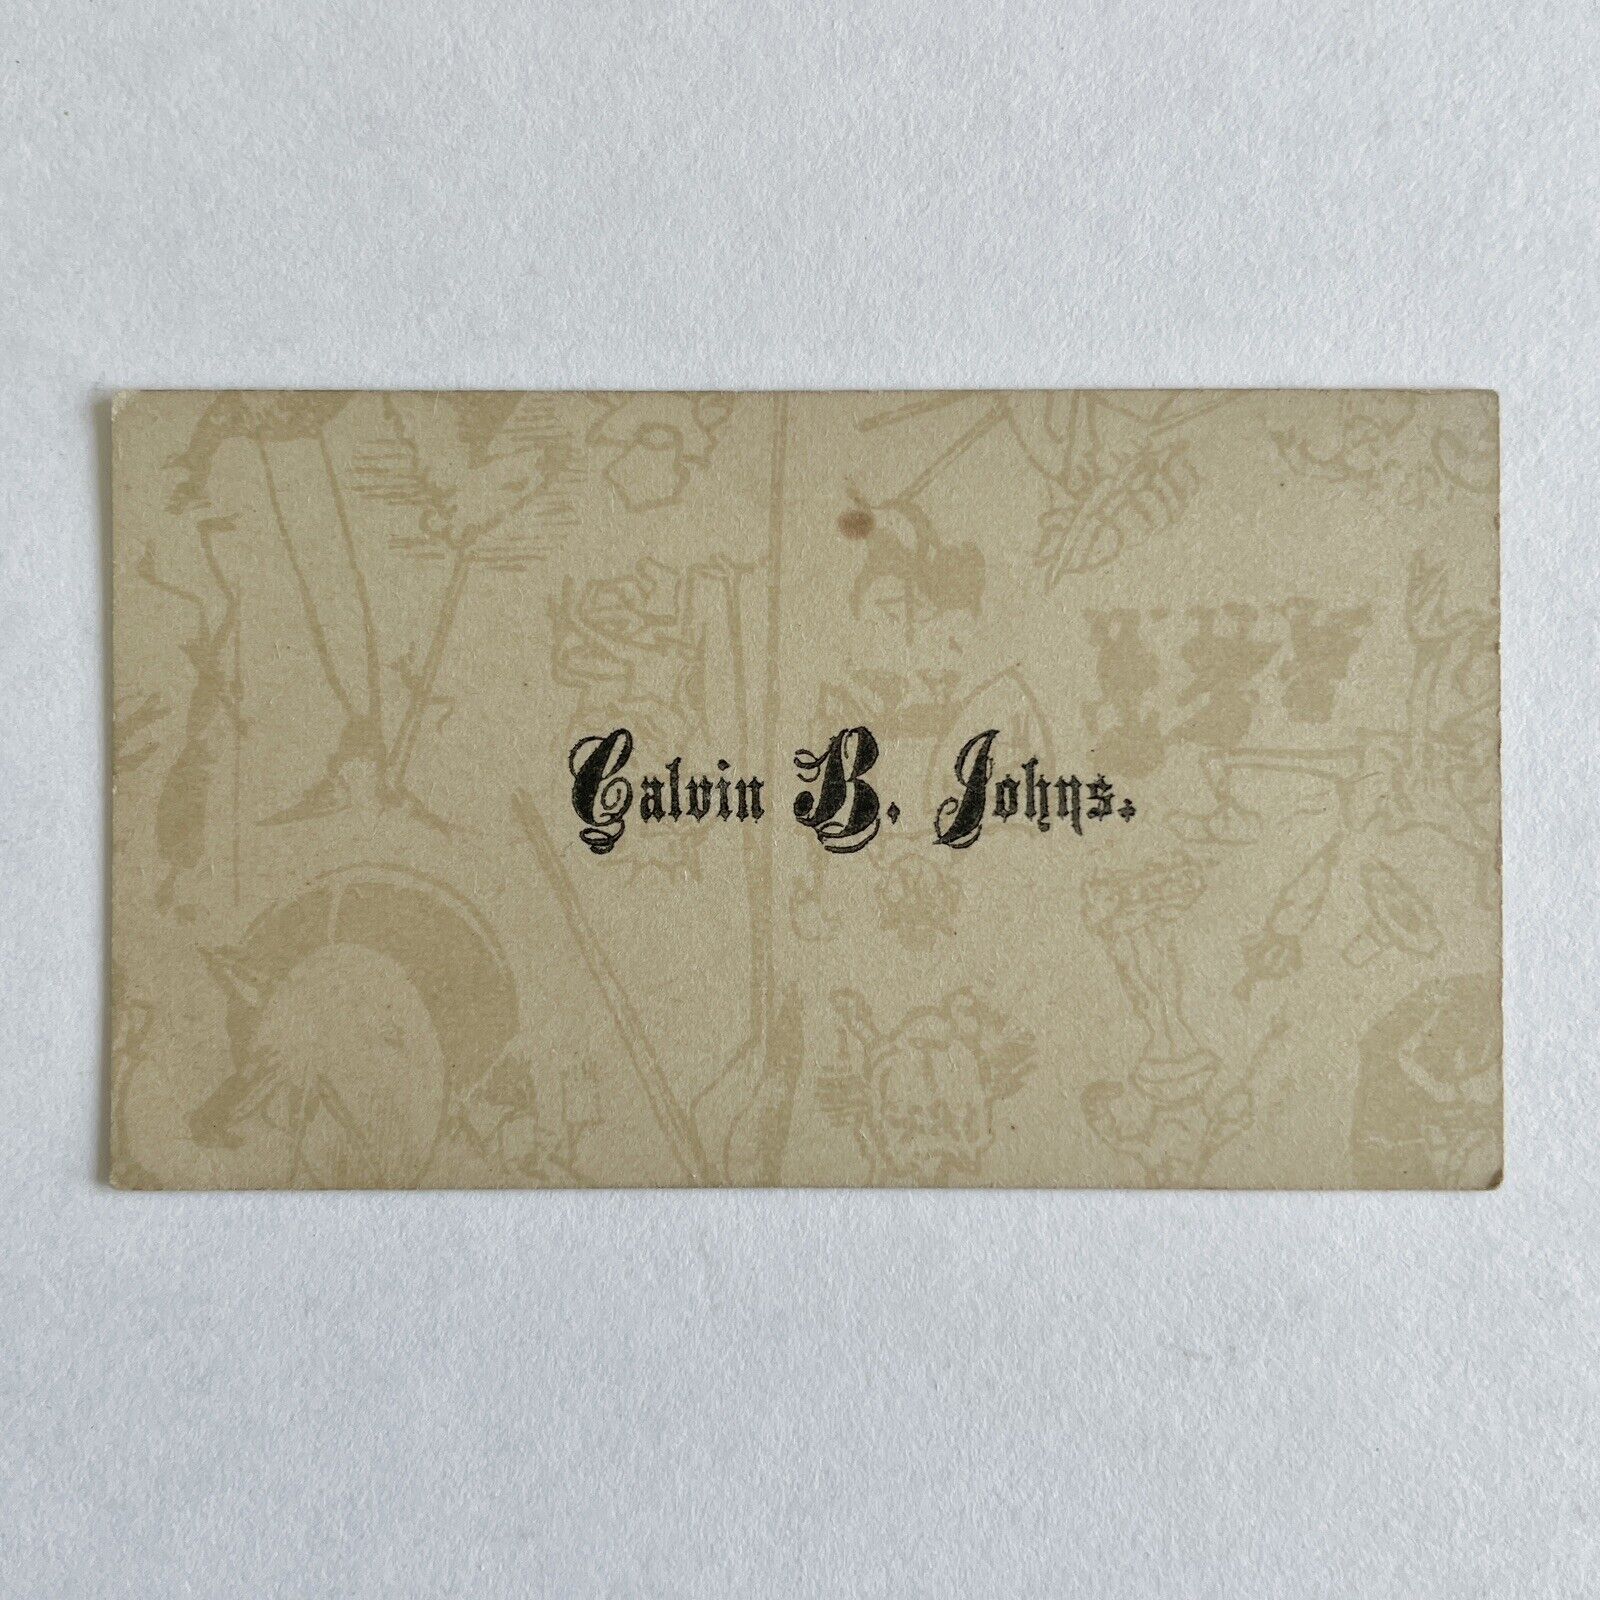 RARE CARTOON COMIC Victorian Calling Card • Calvin B. Johns